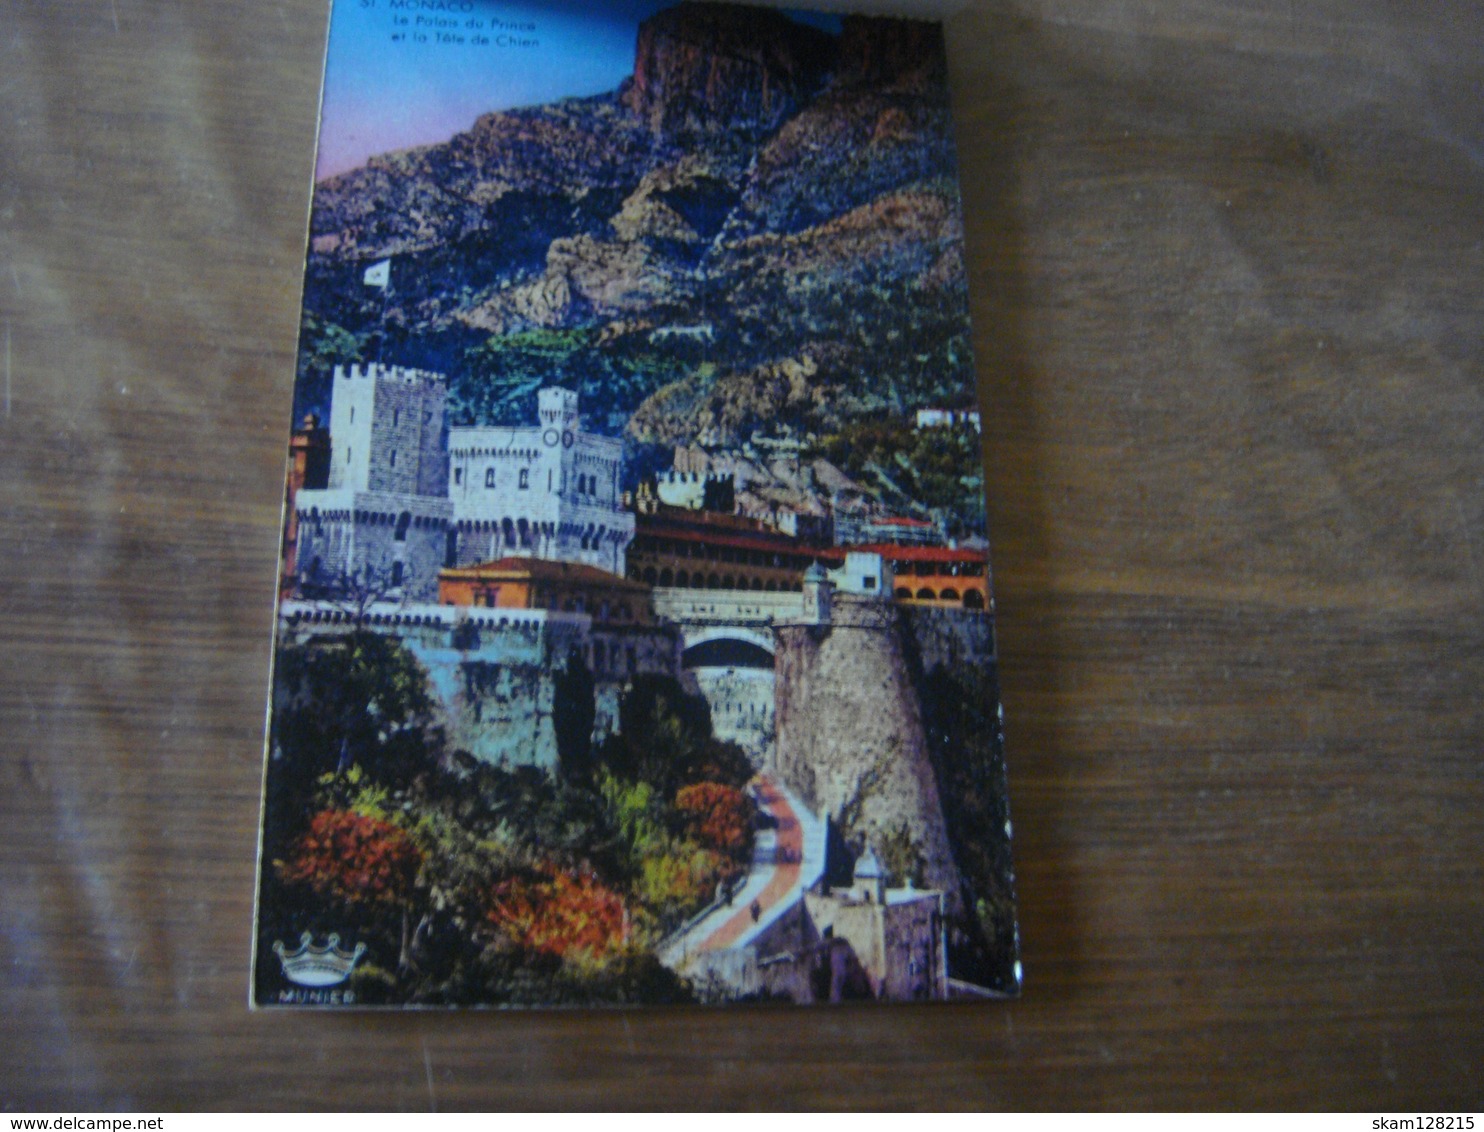 Principauté de MONACO  Monte Carlo - Carnet avec 10 cartes en couleur